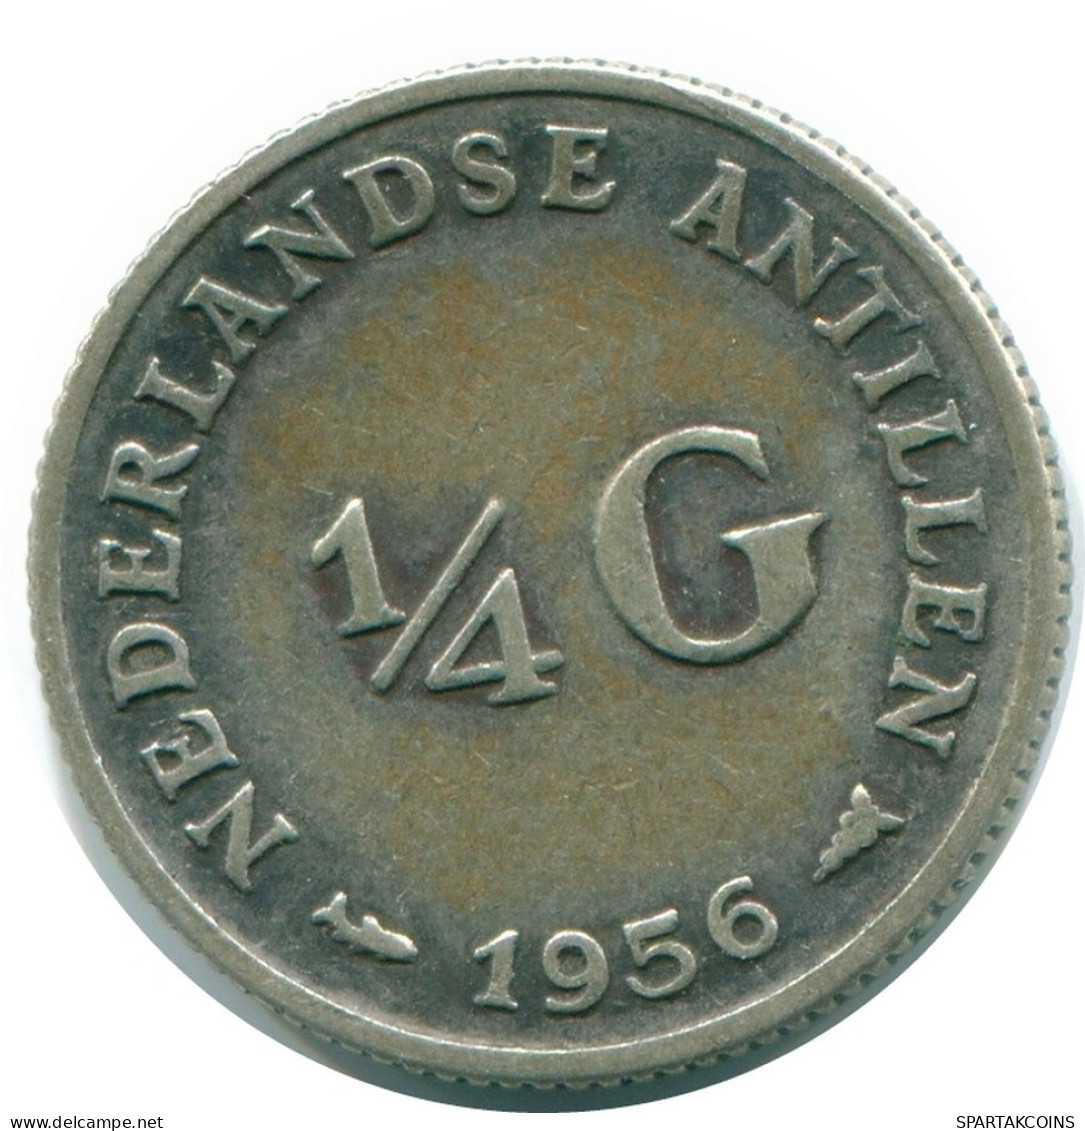 1/4 GULDEN 1956 NIEDERLÄNDISCHE ANTILLEN SILBER Koloniale Münze #NL10944.4.D.A - Netherlands Antilles